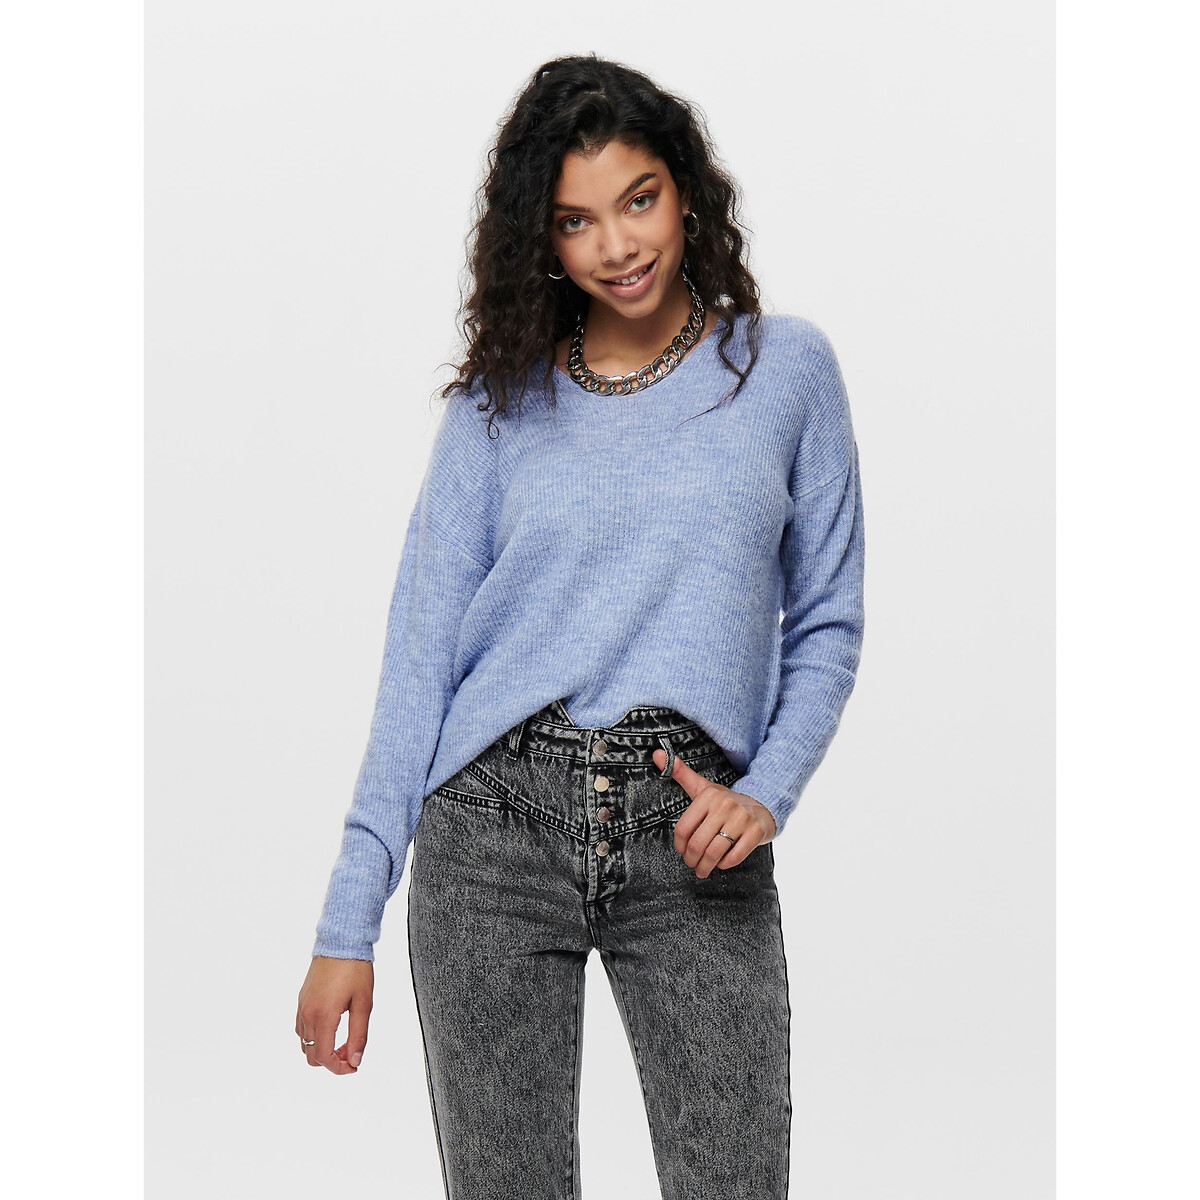 Lefties jumper discount 83% Blue S WOMEN FASHION Jumpers & Sweatshirts Chenille 